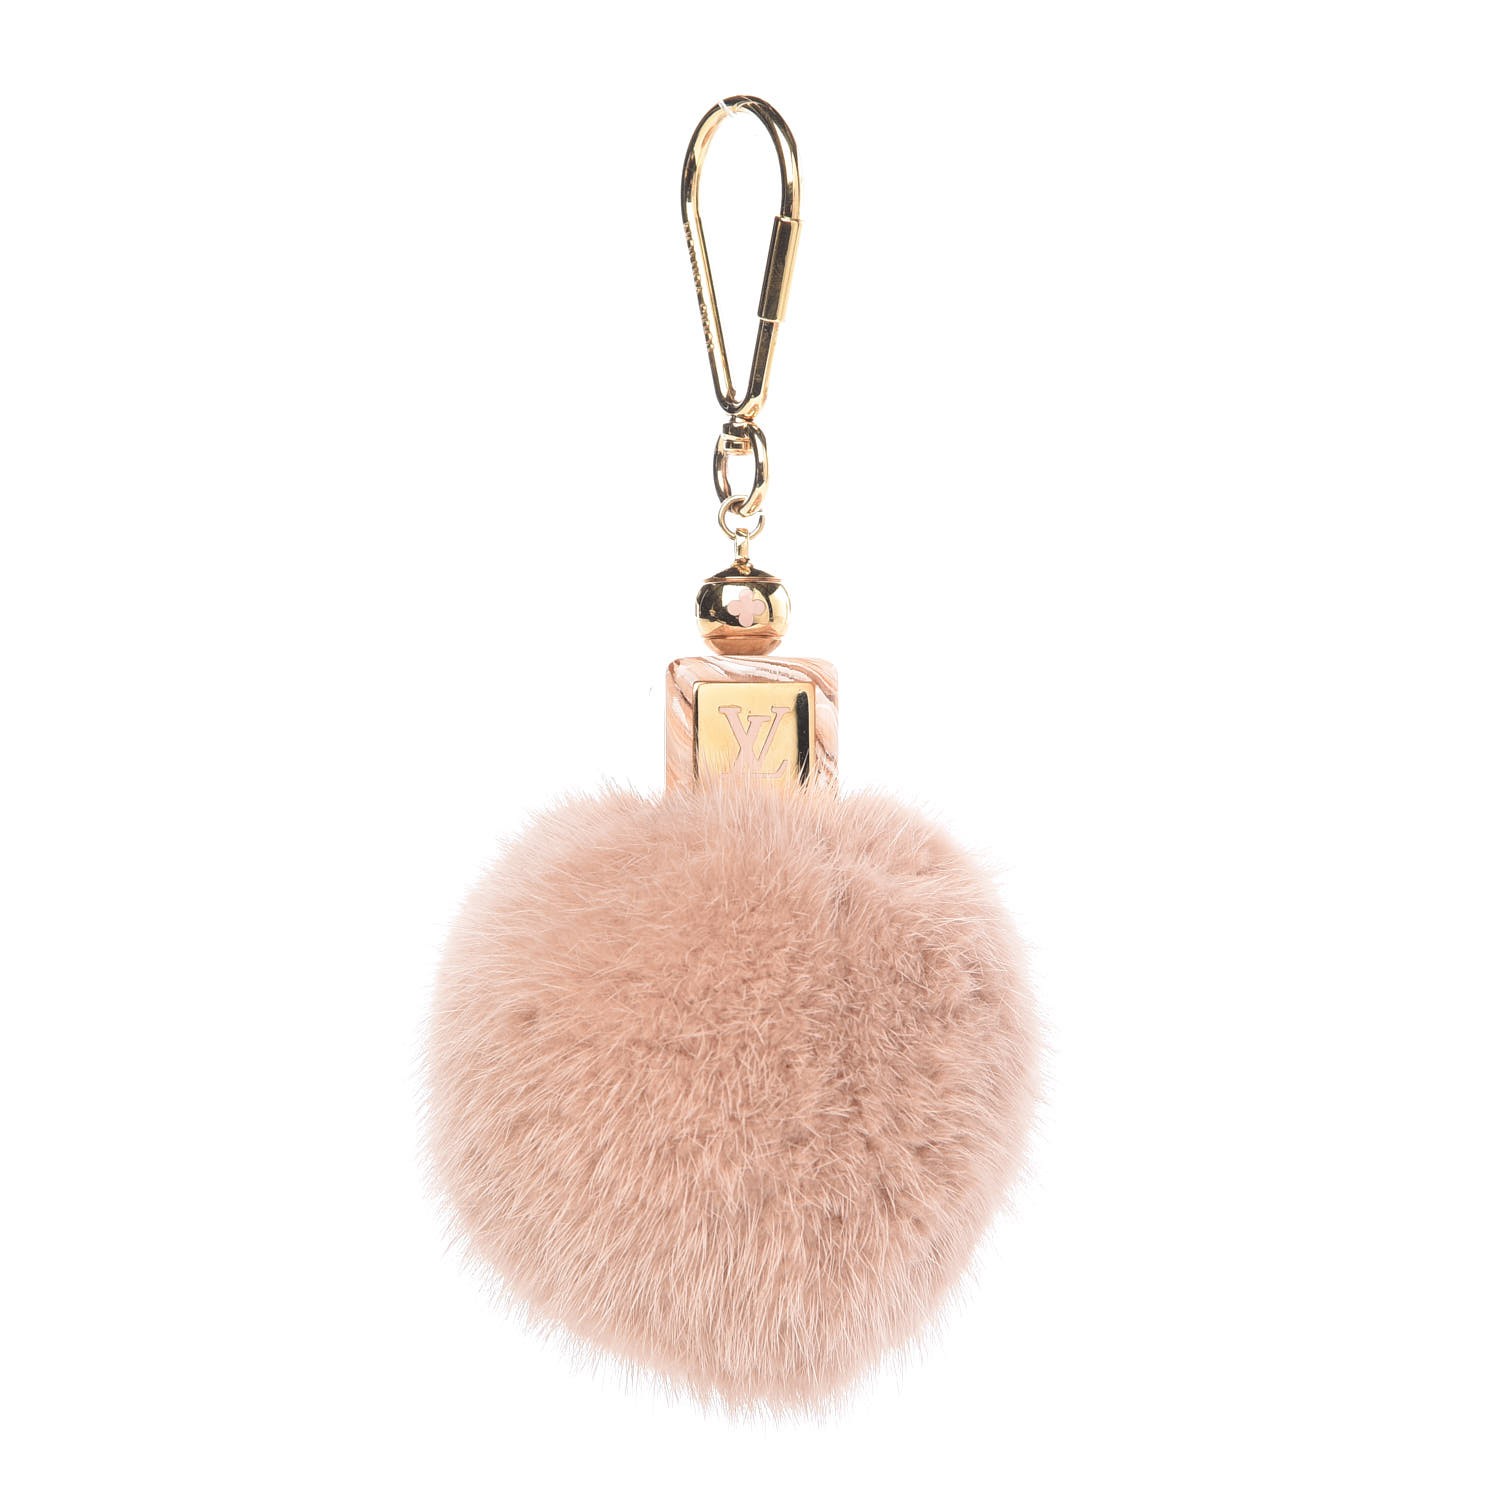 louis vuitton fur keychain  Fluffy bag, Fancy accessories, Bag charm